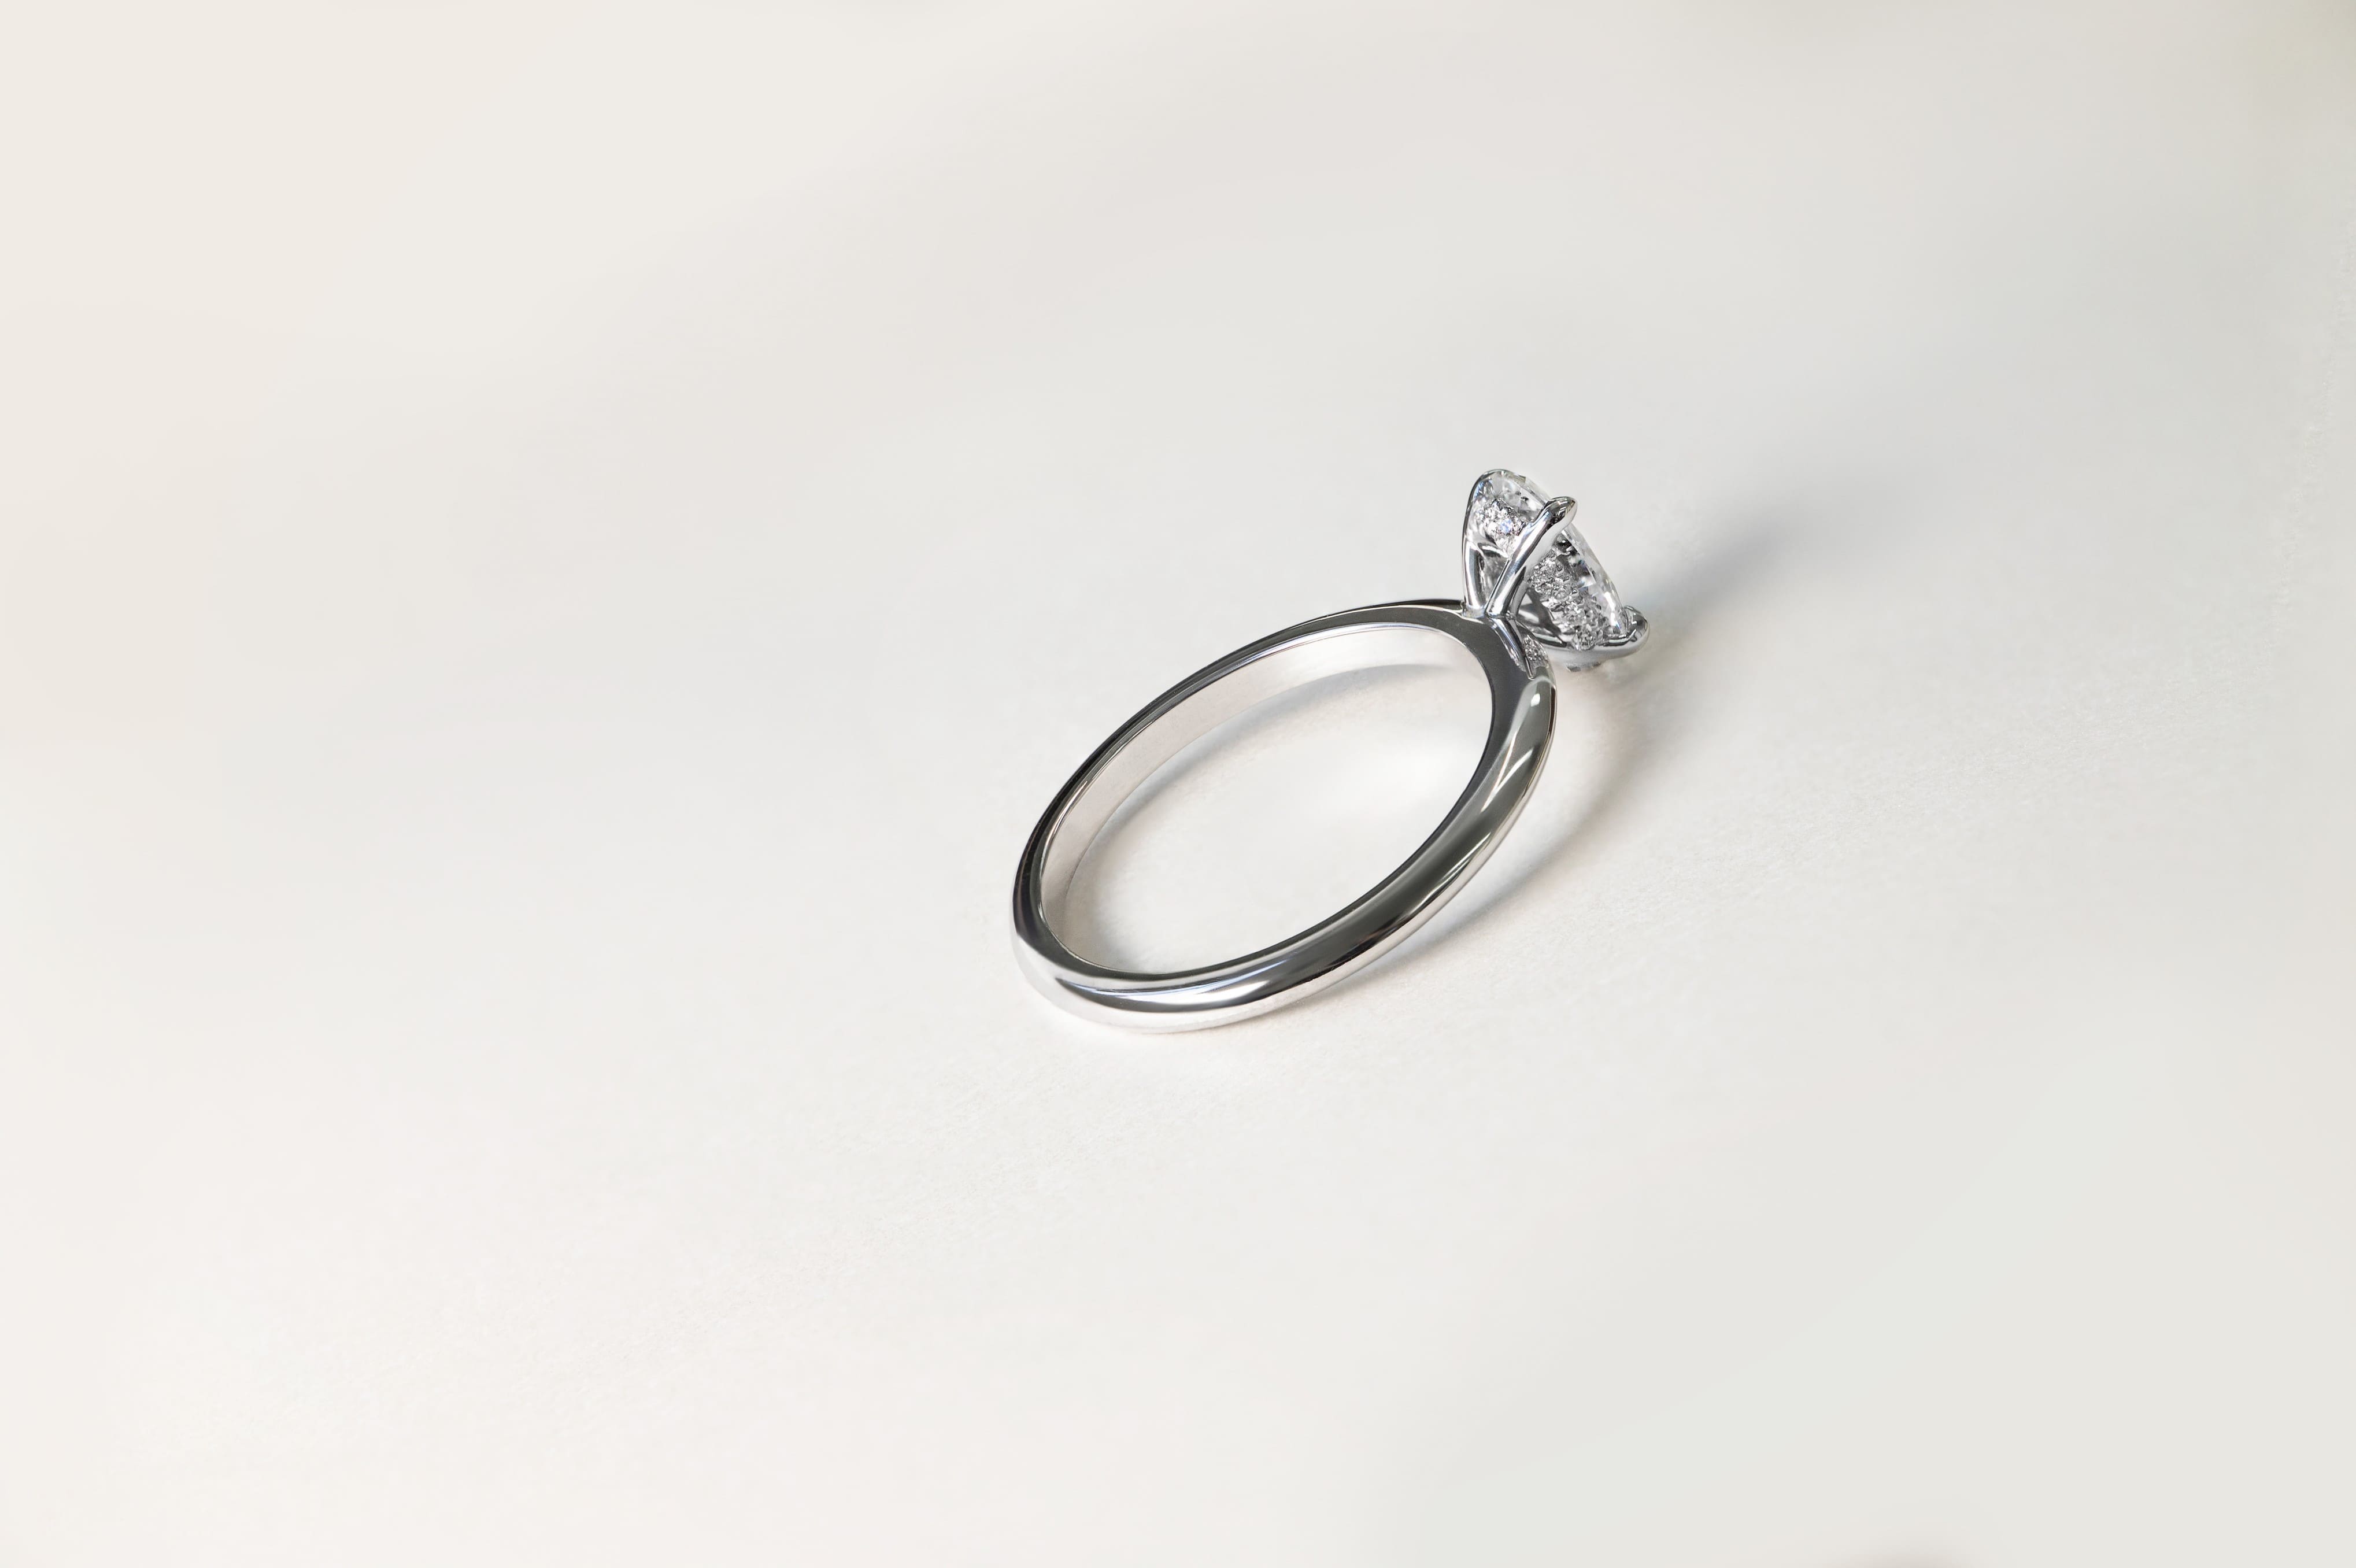 Queensland Engagement & Wedding Rings - Diamondport